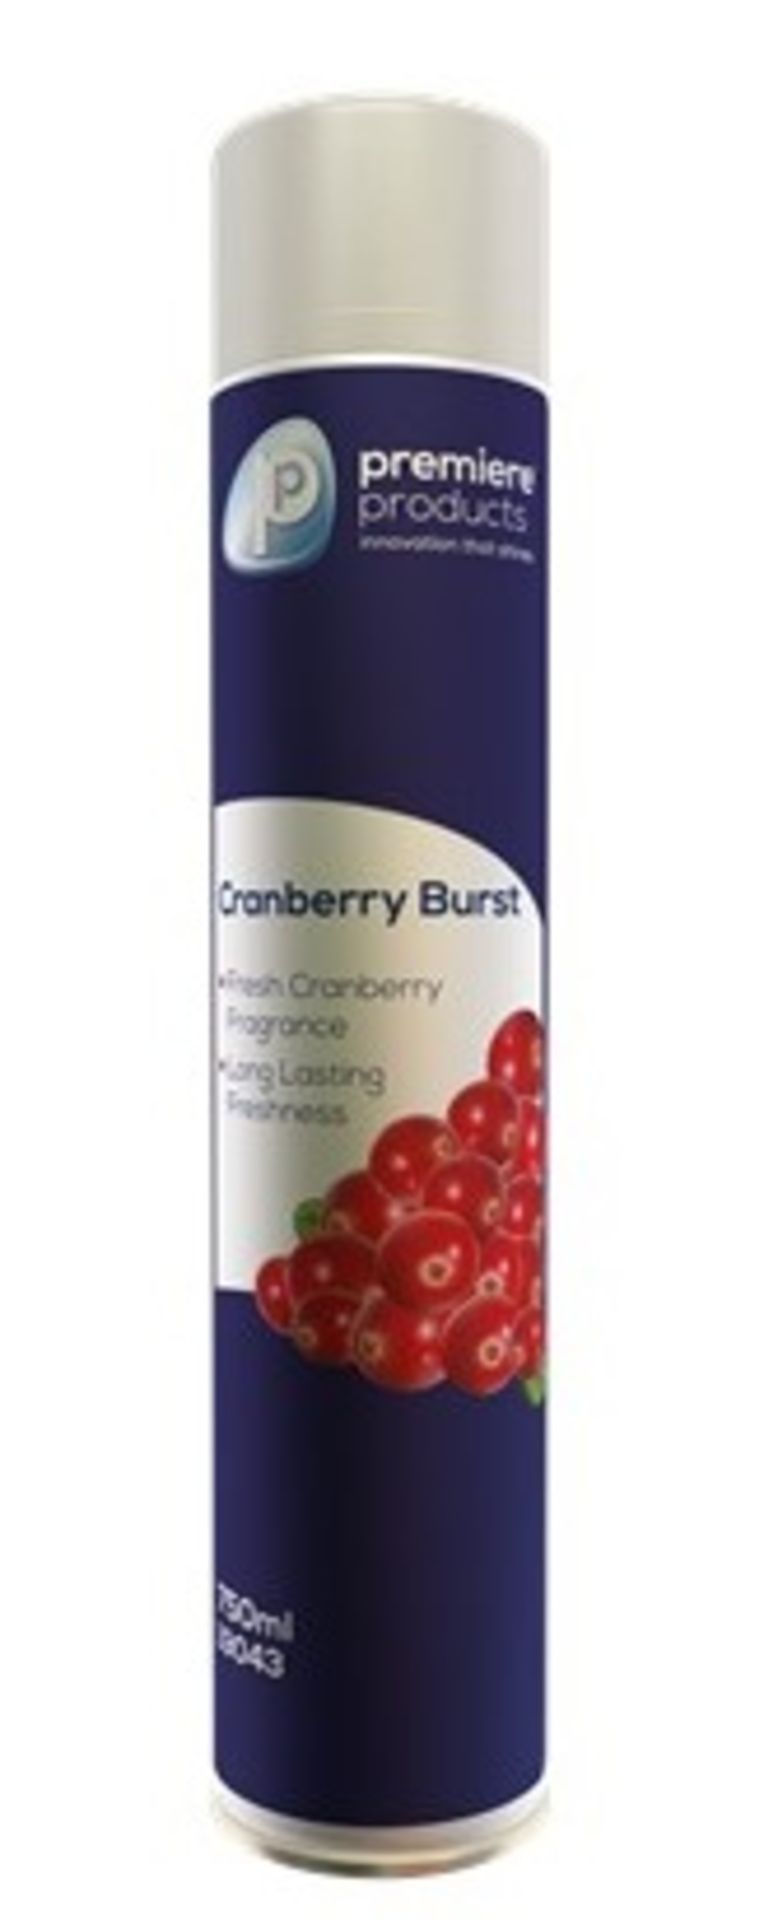 48 x Premiere 750ml Cranberry Burst Air Freshener - Premiere Products - Includes 48 x 750ml